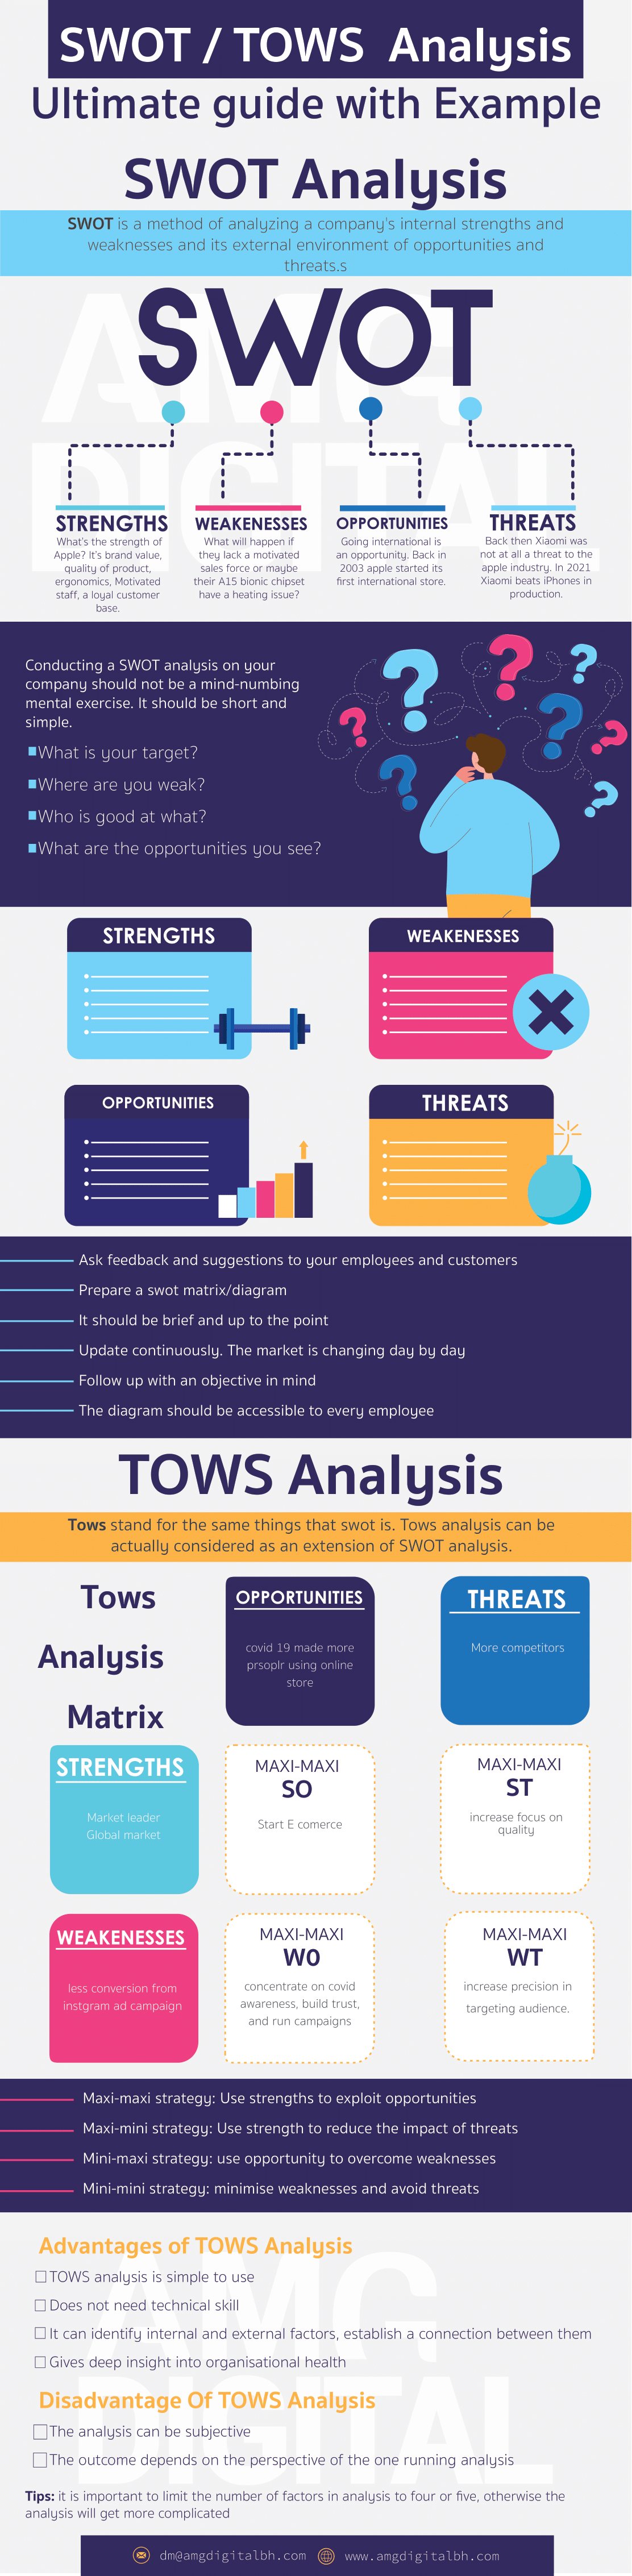 Swot/Tows analysis and Example matrix